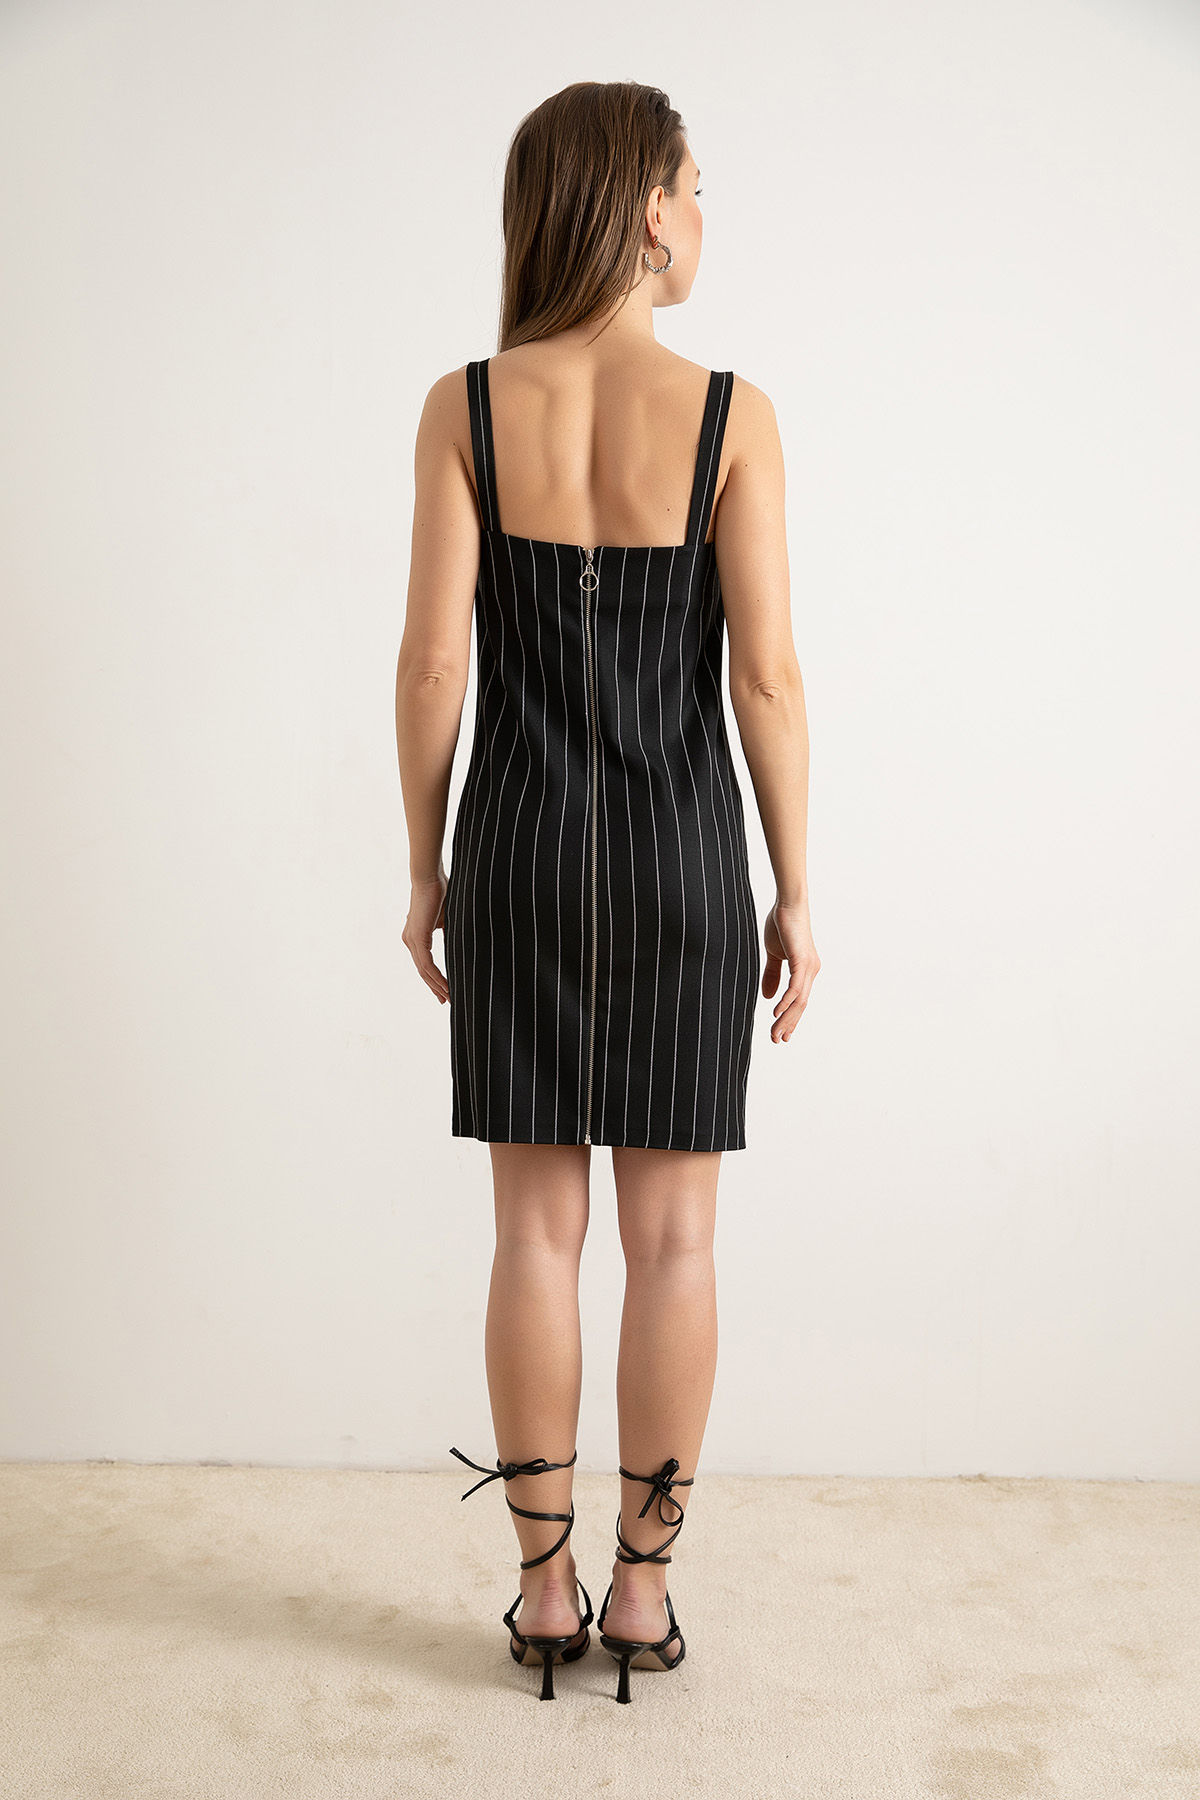 Women's Black Slit Striped Dress